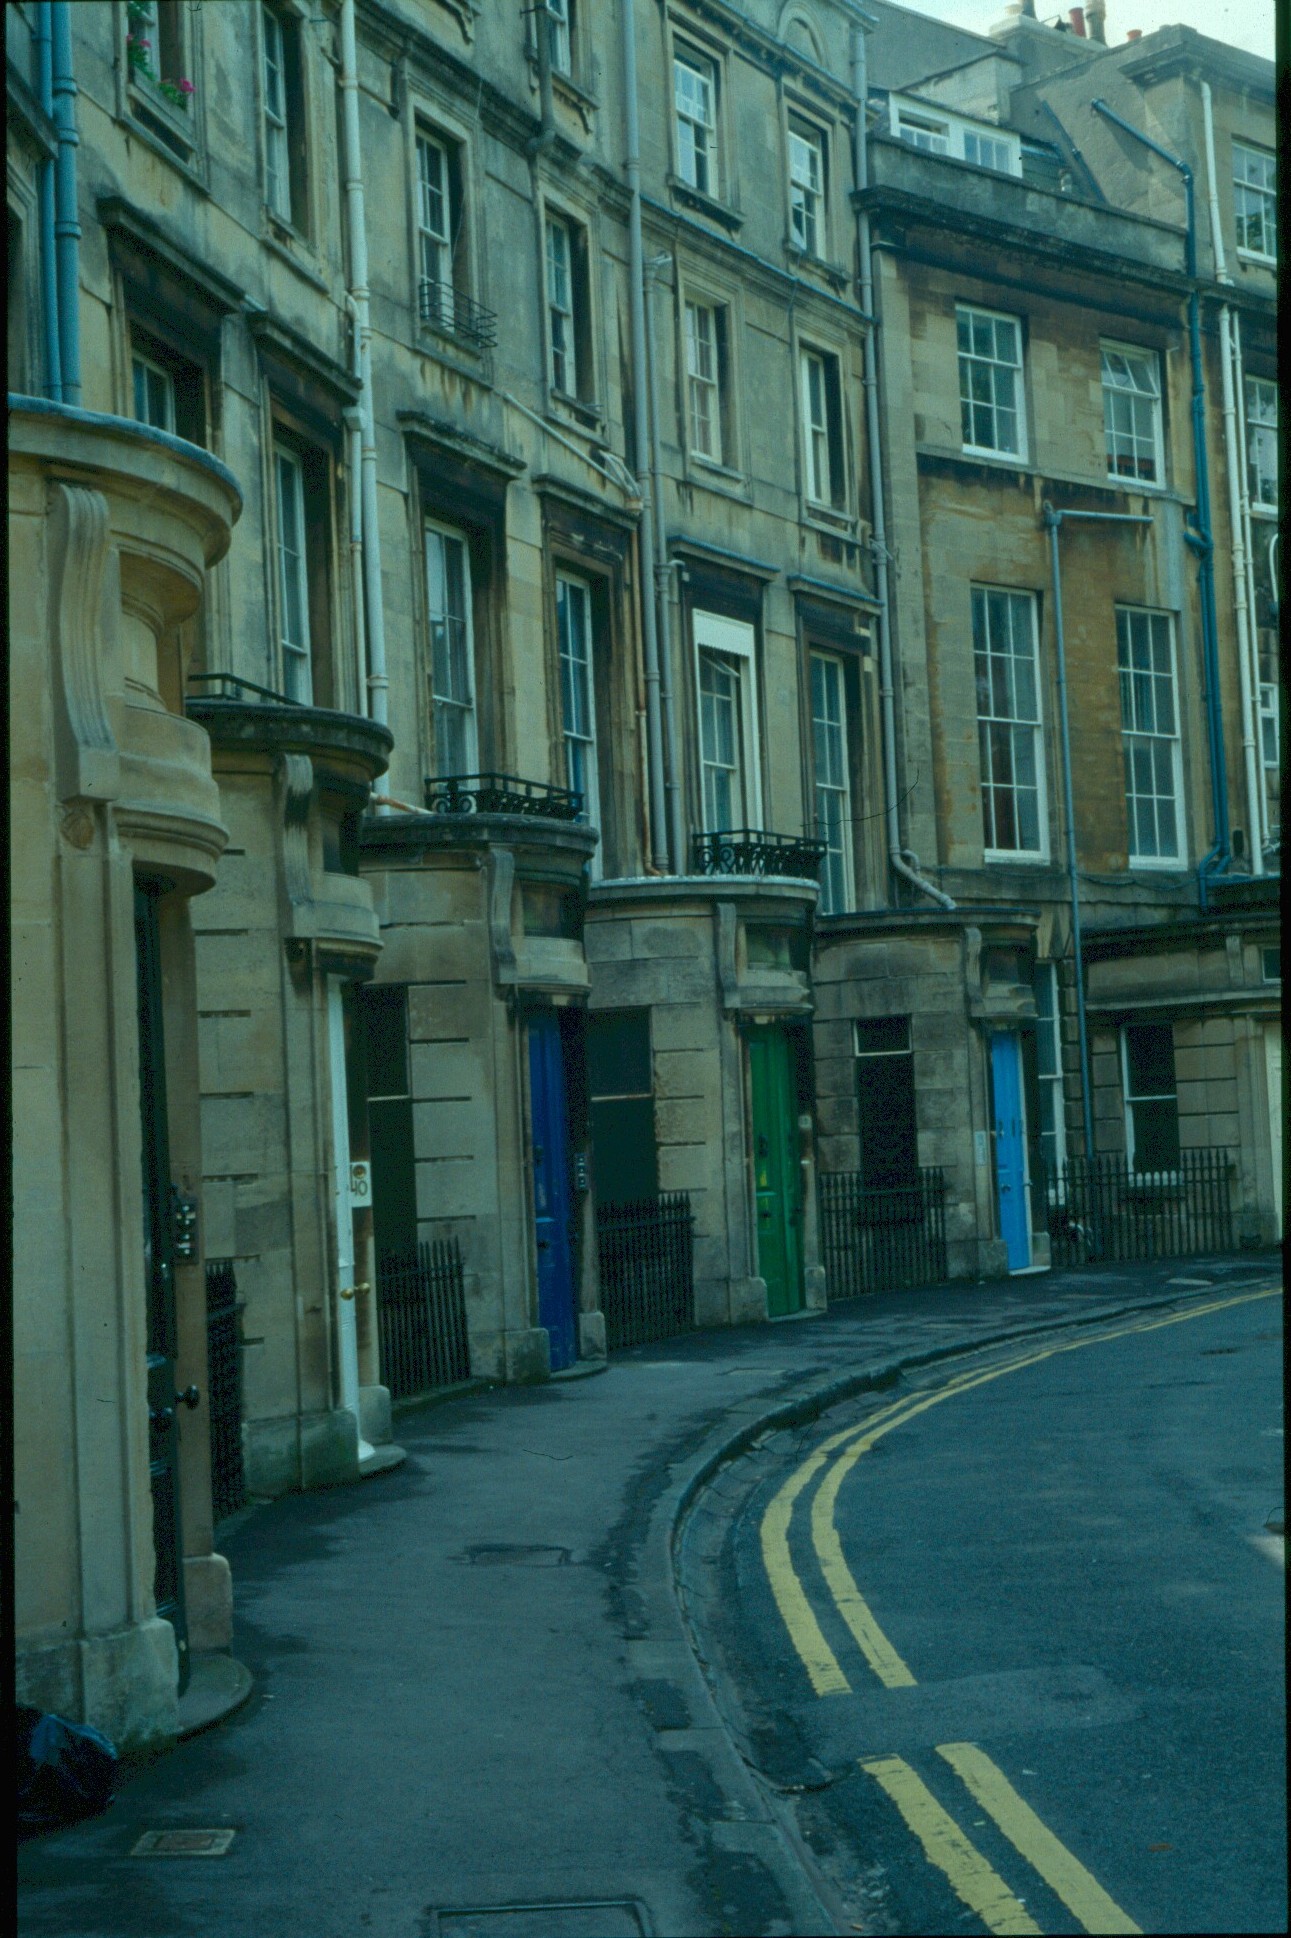 a group of buildings along a narrow street